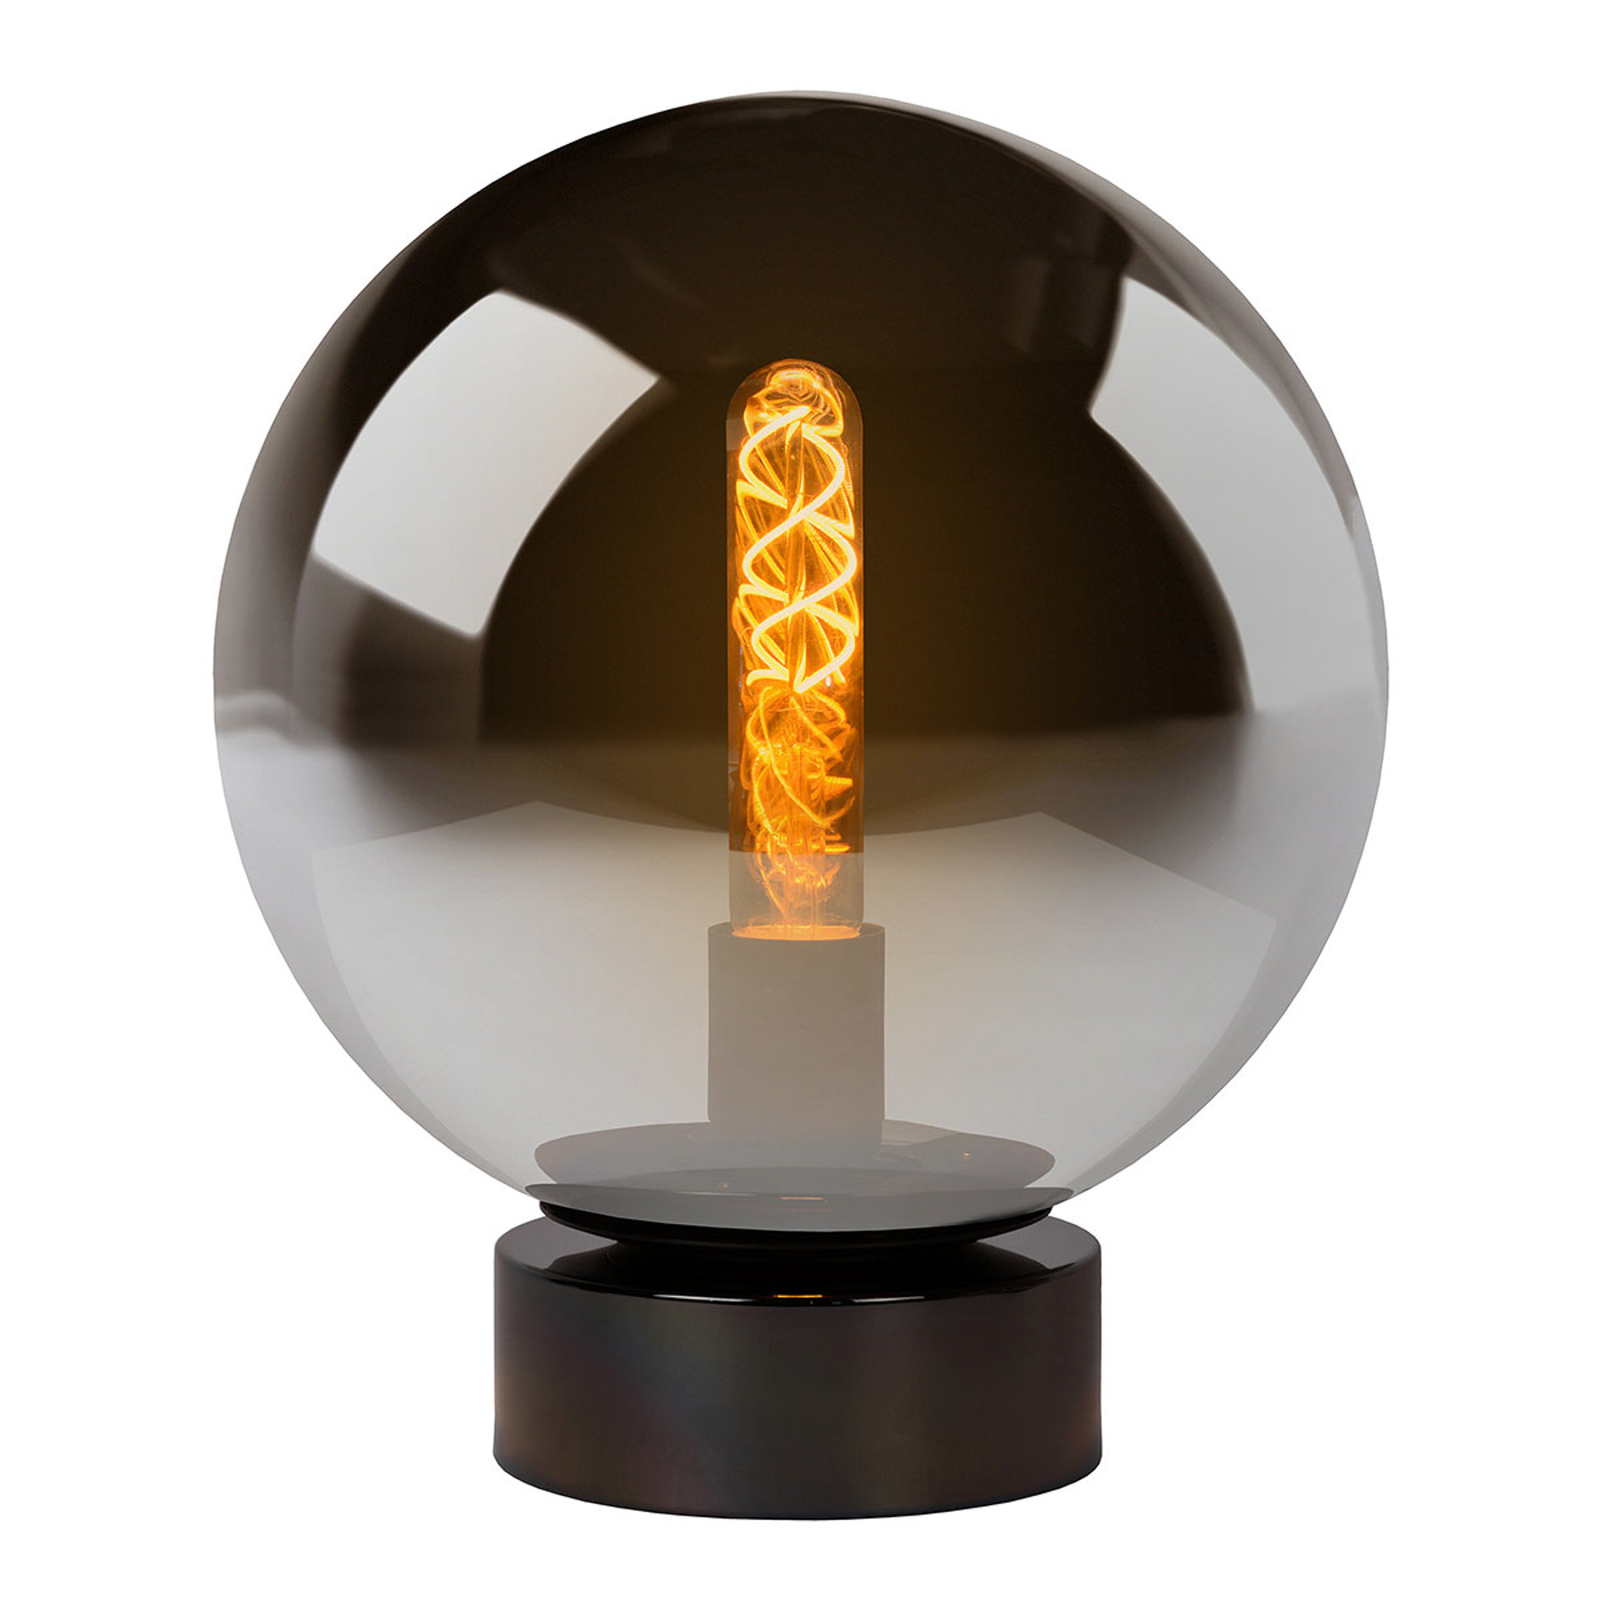 Jorit glasbordlampe i sfærisk form, 25 cm